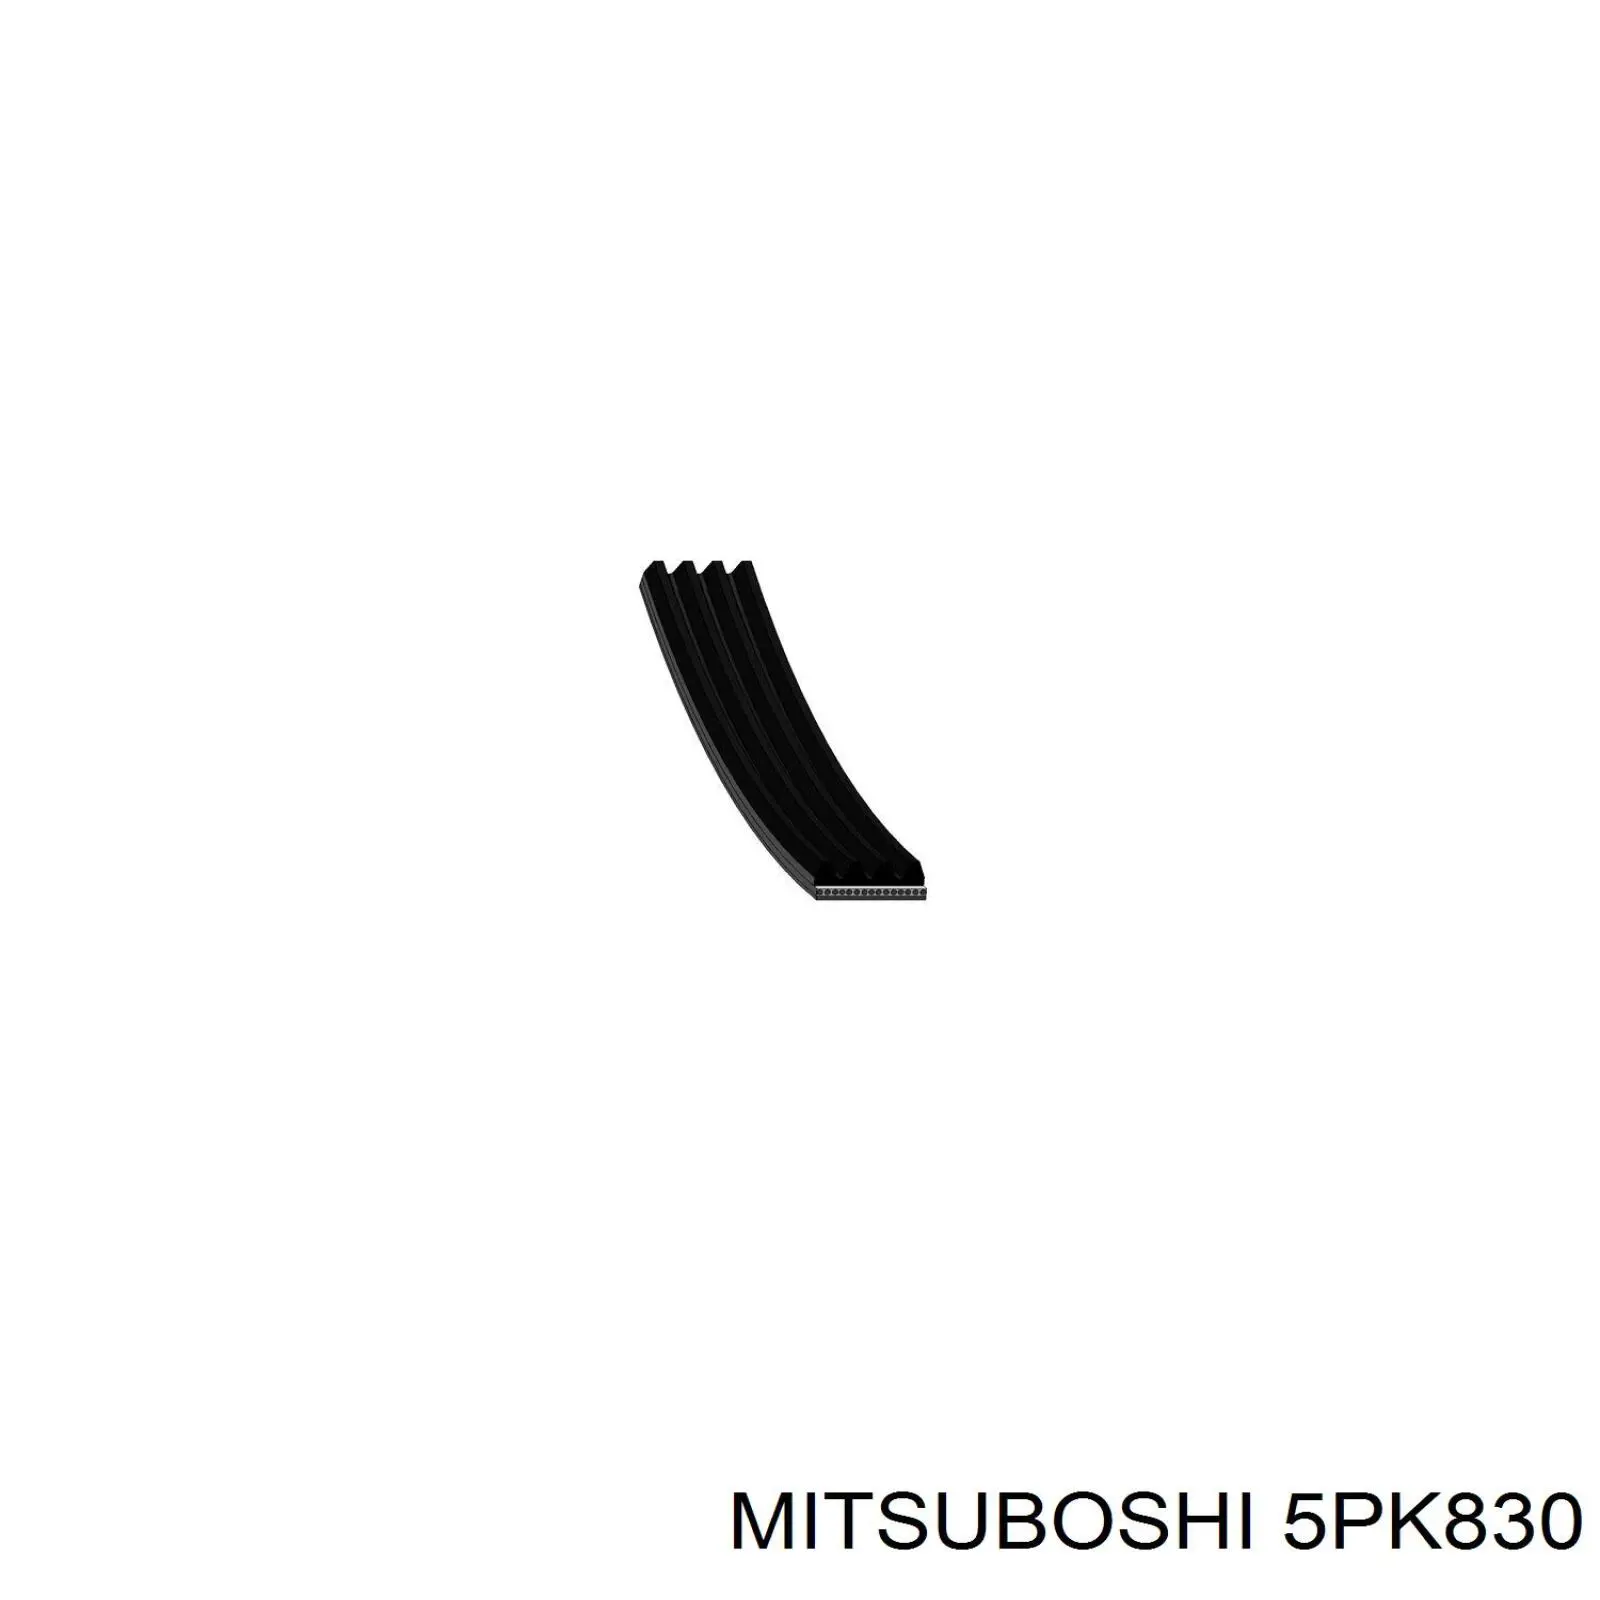 5PK830 Mitsuboshi correa trapezoidal